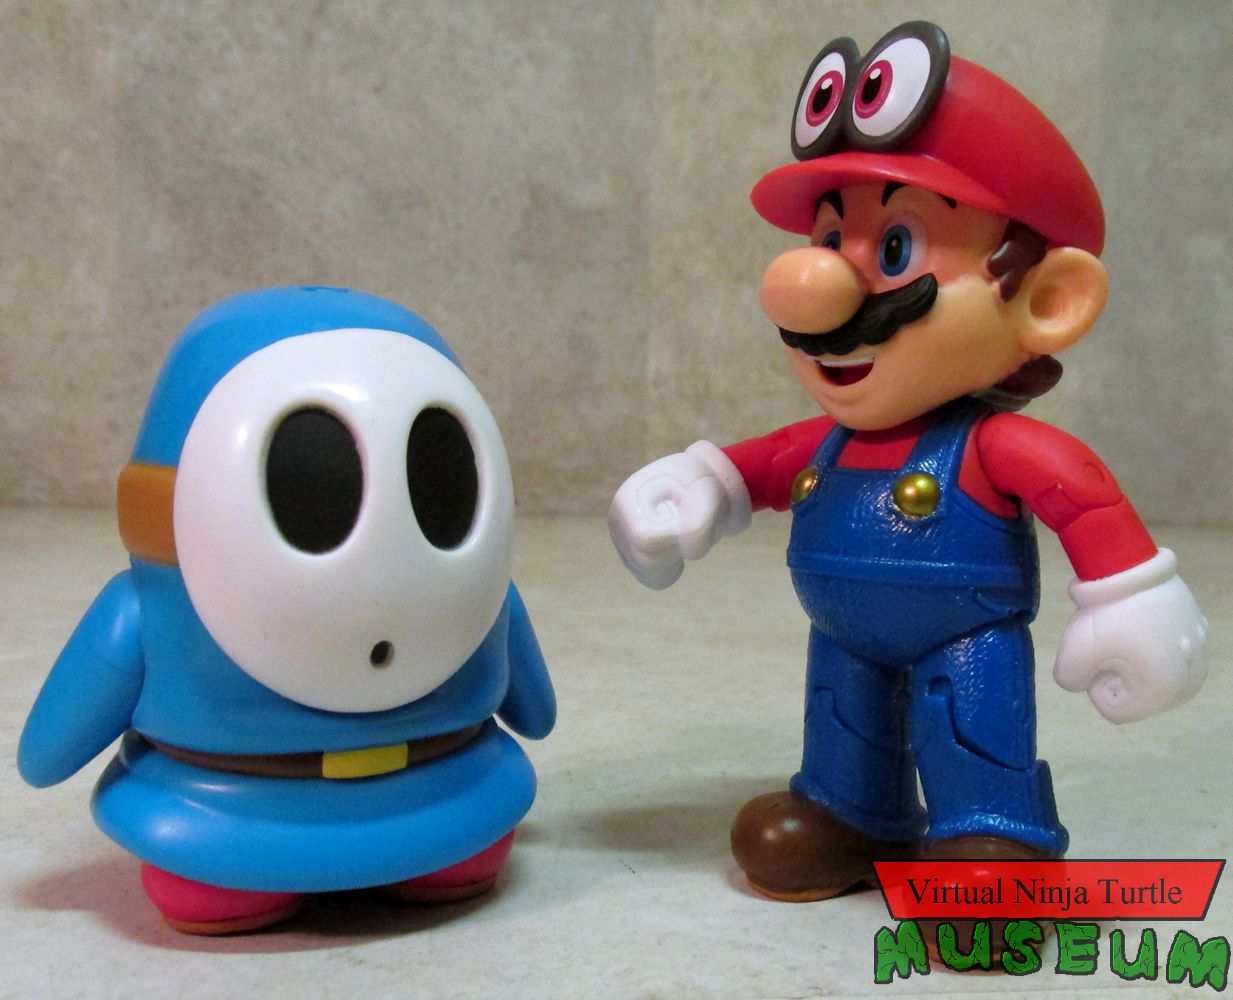 Shy Guy with Mario